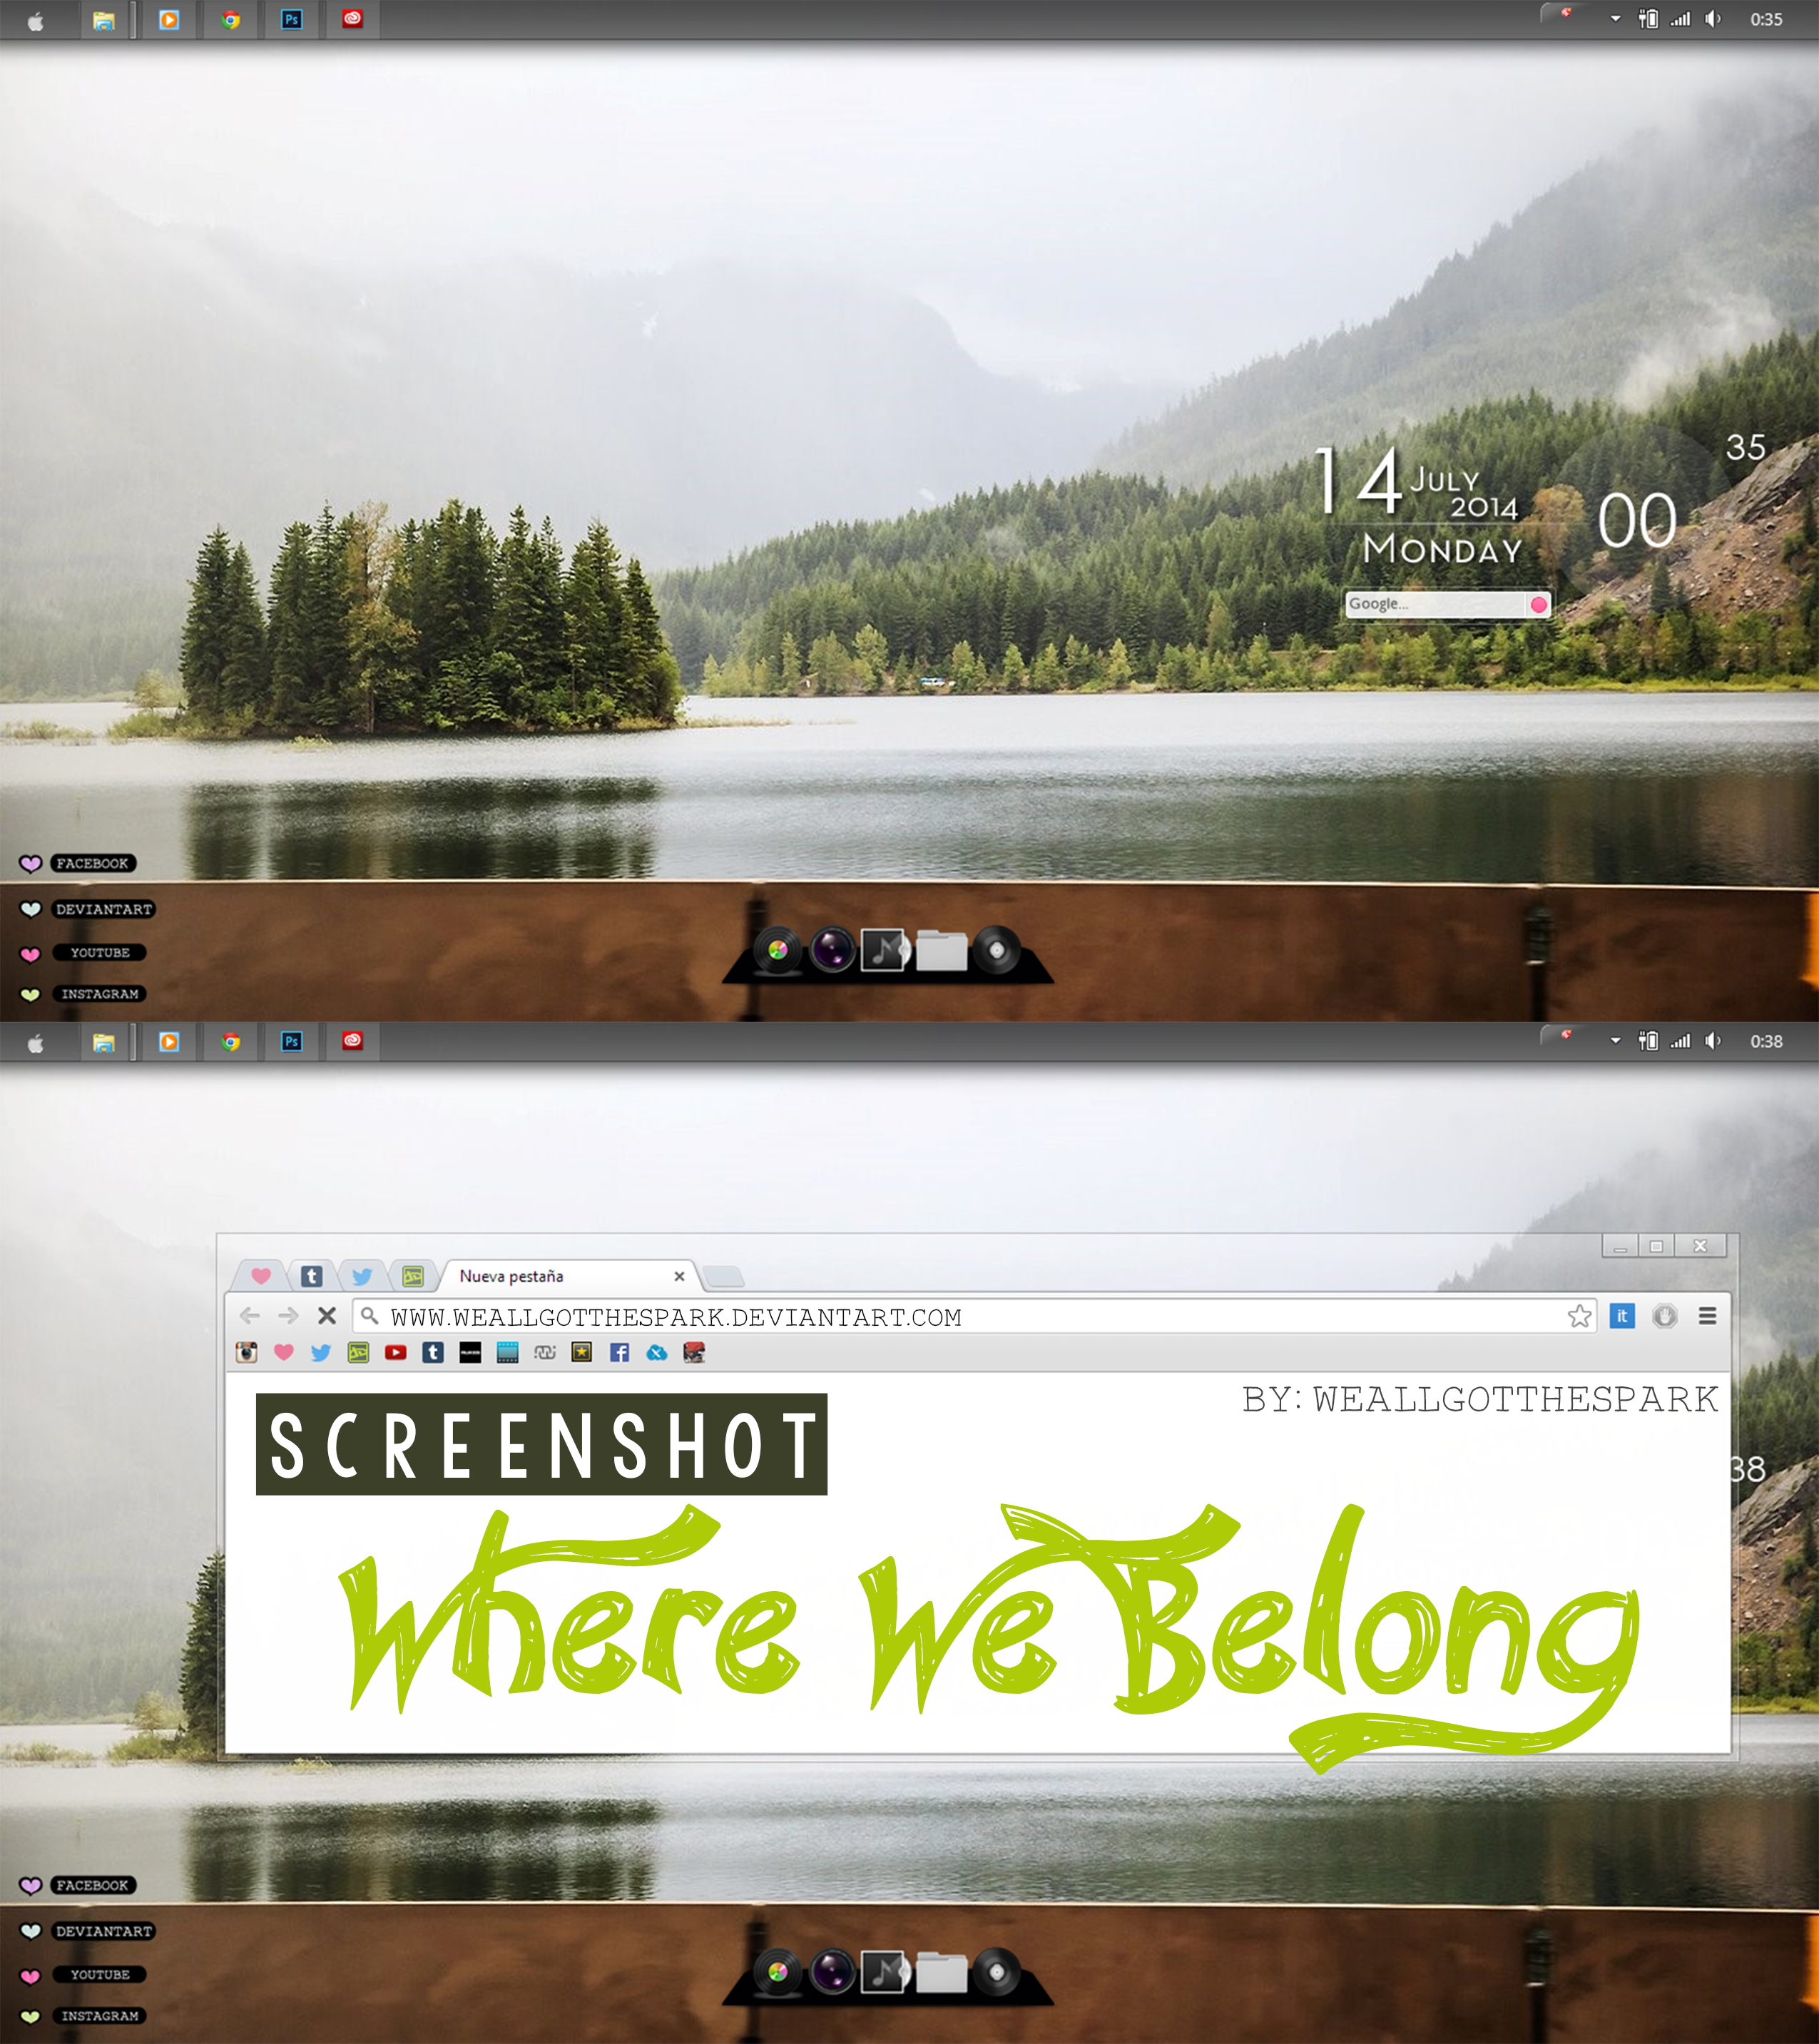 Where We Belong|SCREENSHOT| Windows 8|